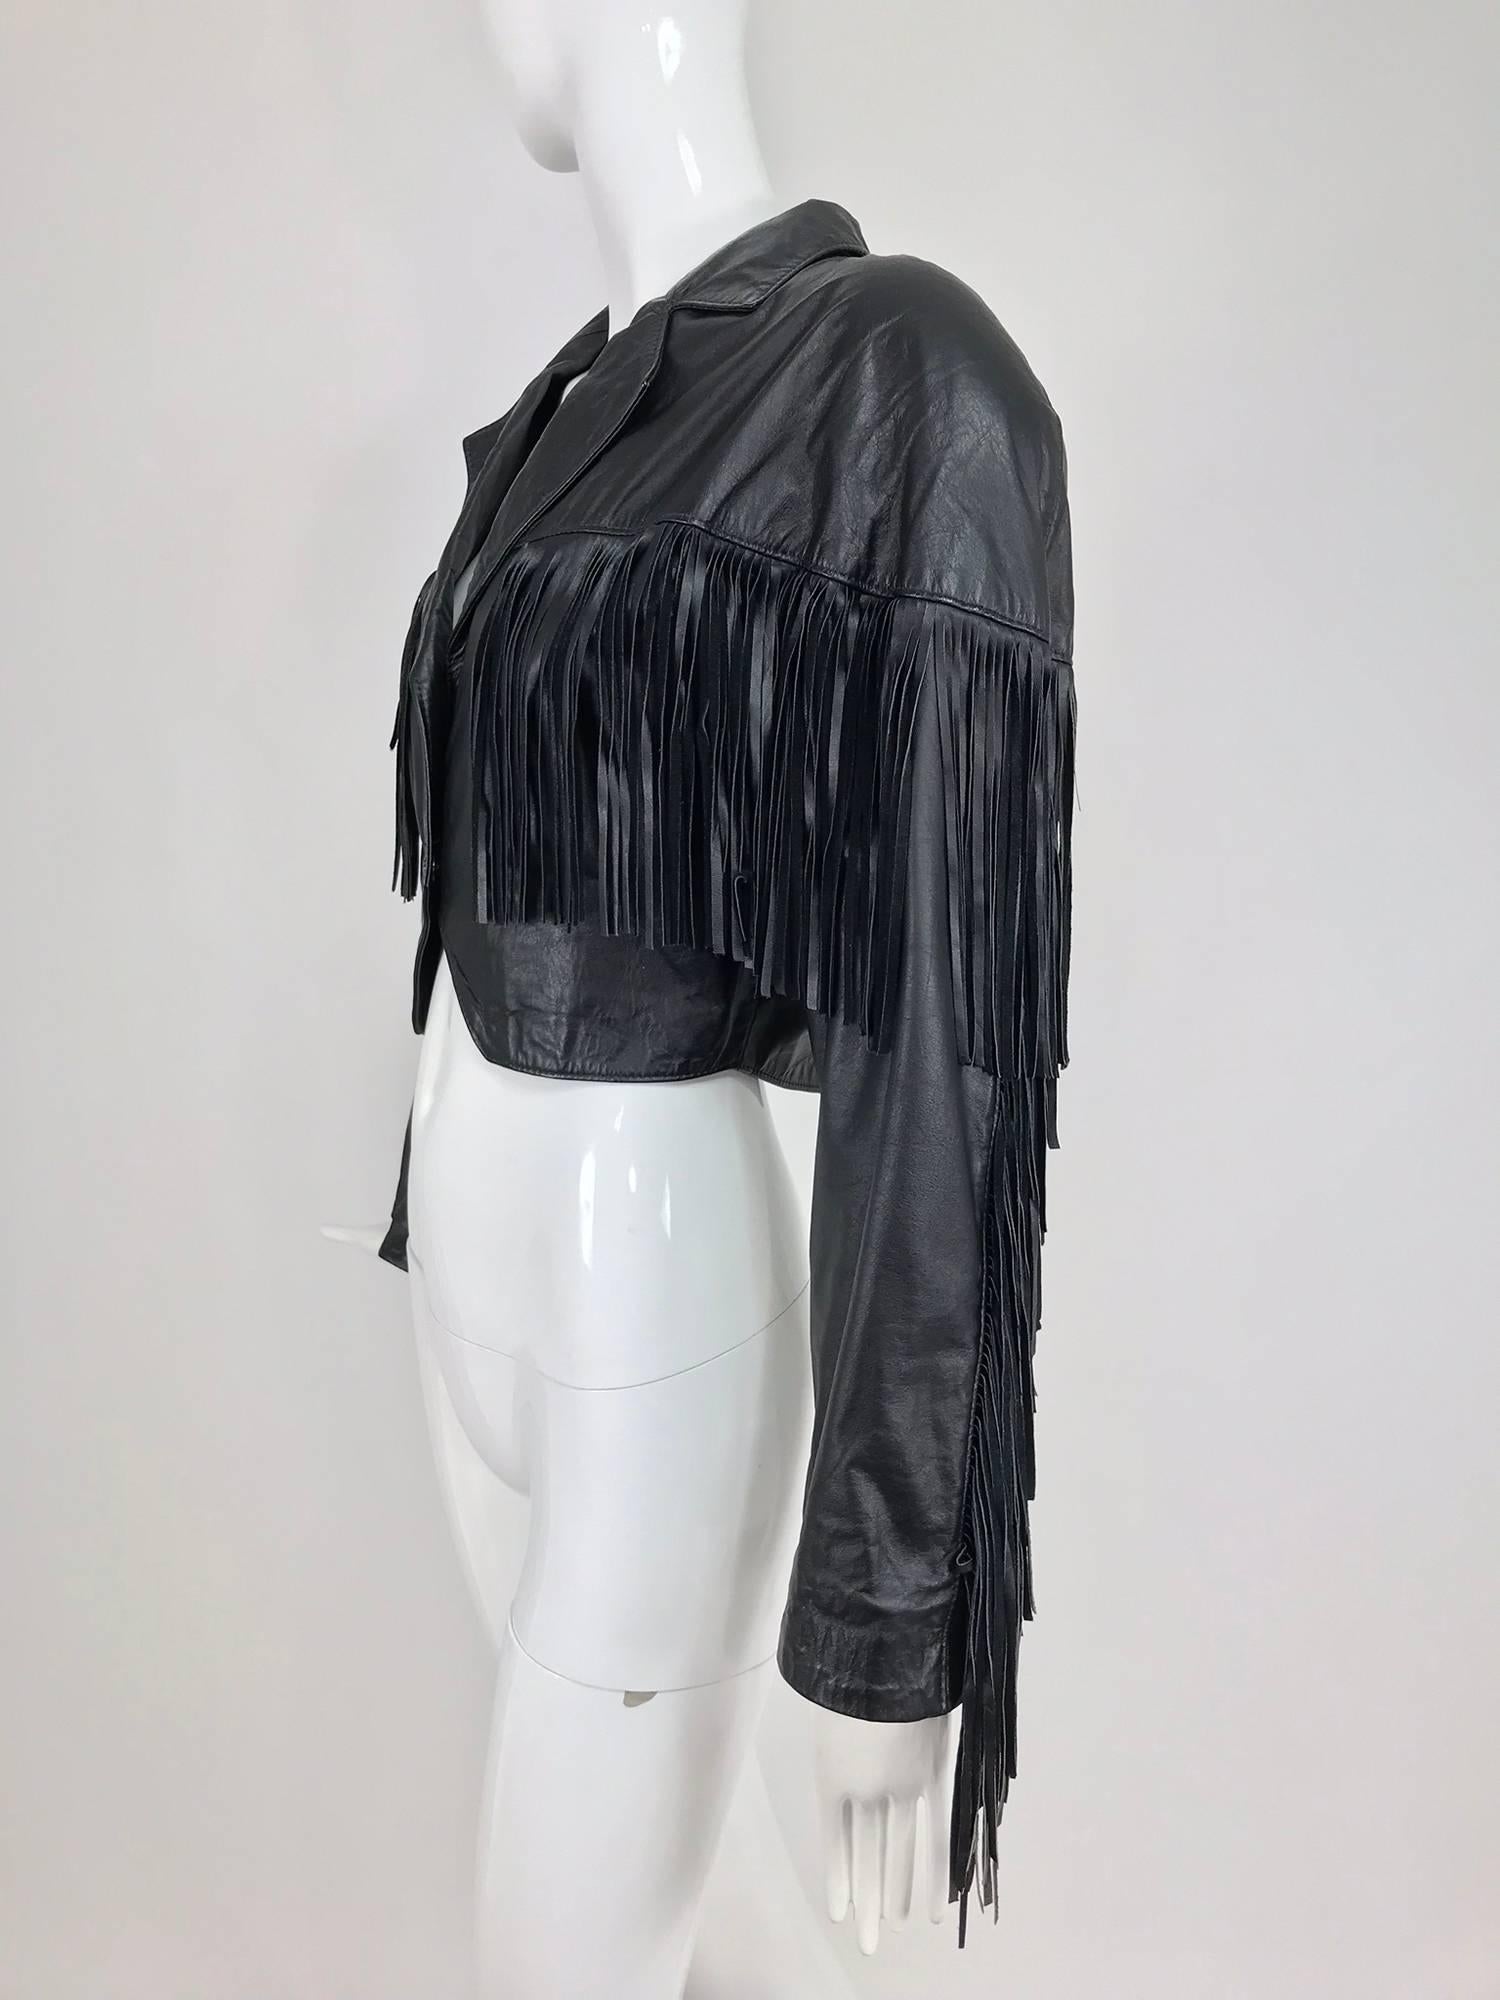 Maziar Betty Boop cowgirl black fringe leather jacket 1980s 4